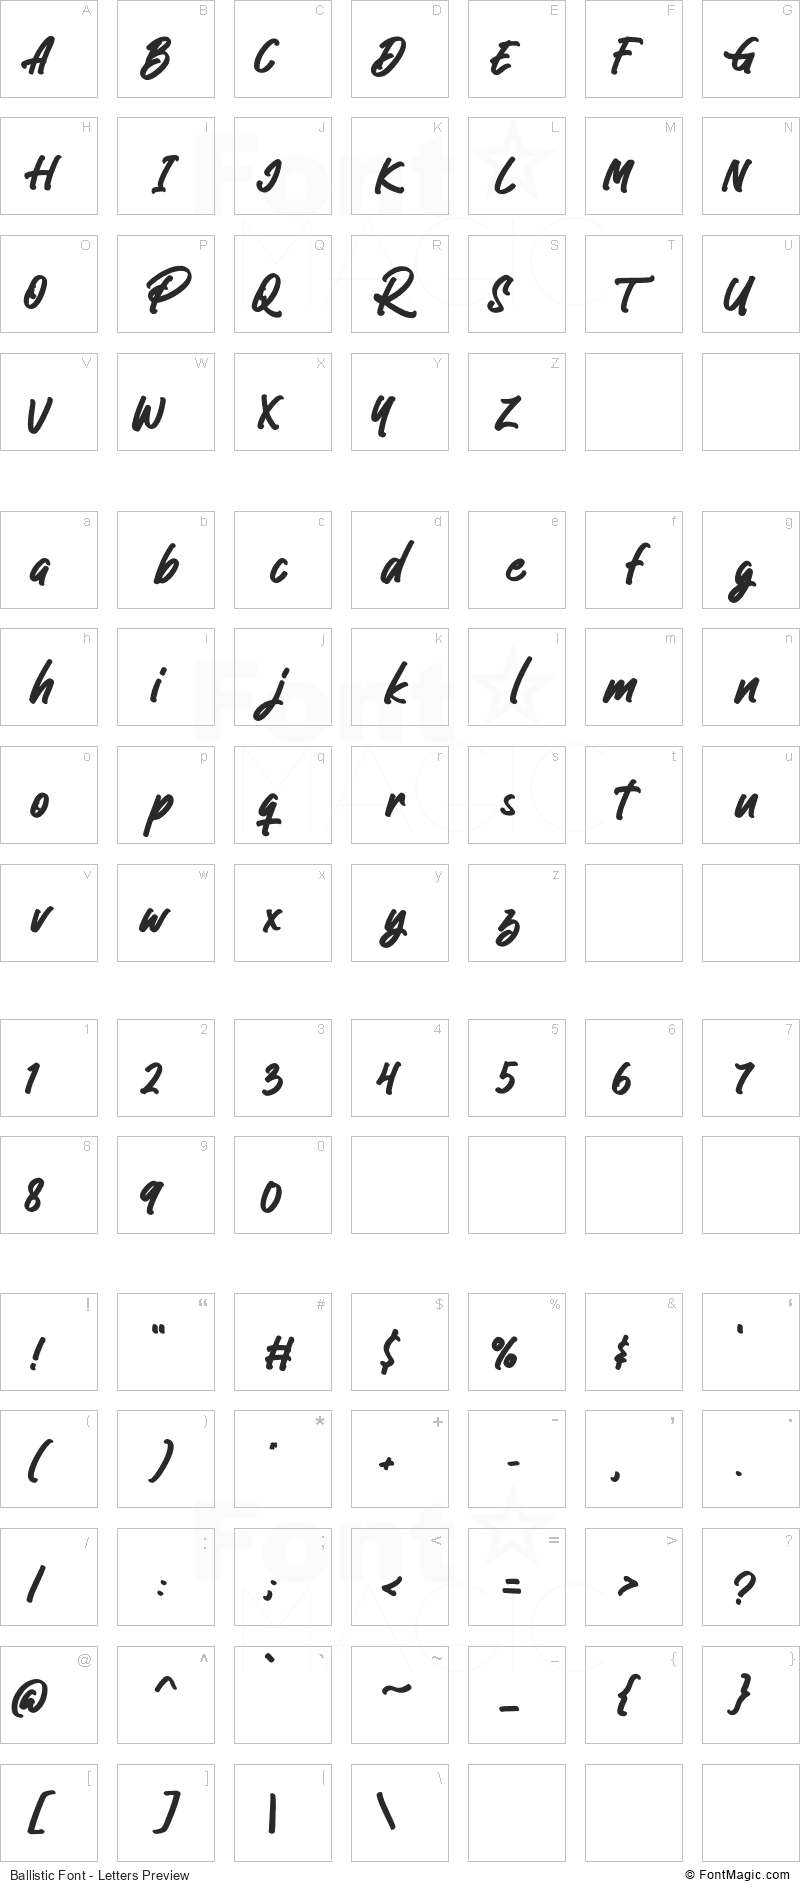 Ballistic Font - All Latters Preview Chart